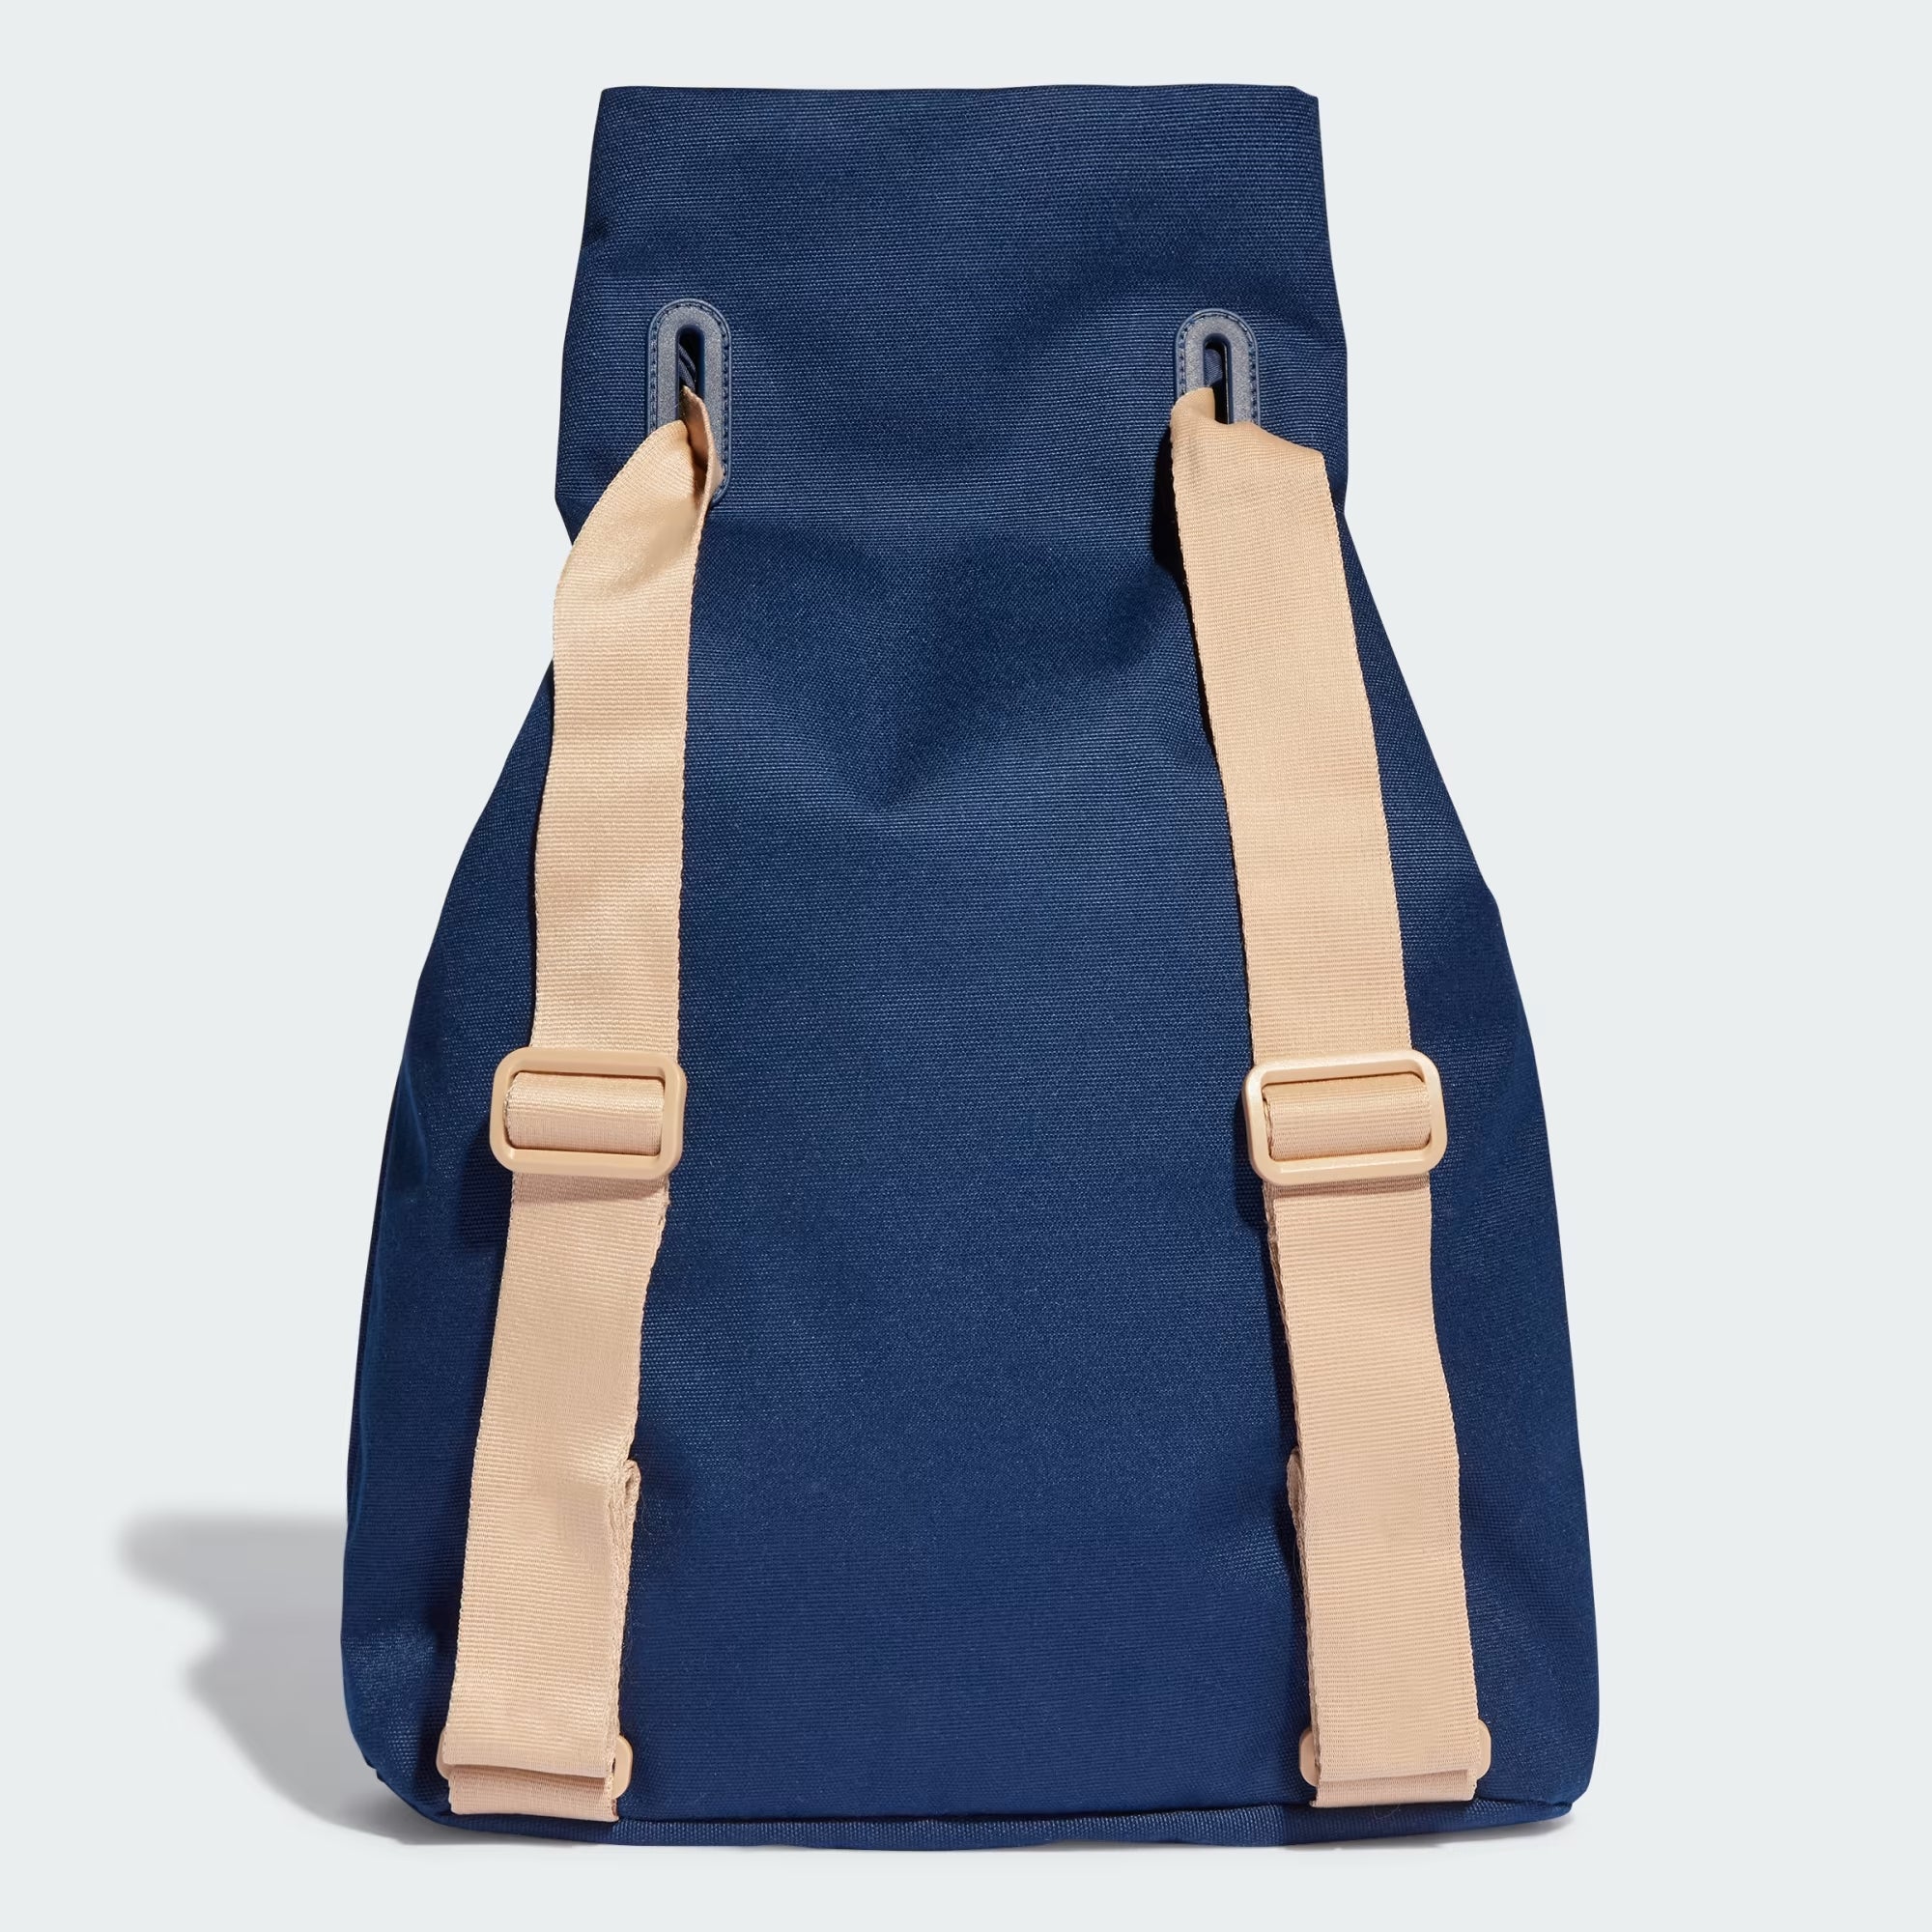 Adidas Trefoil Crest Bucket Backpack - Unisex